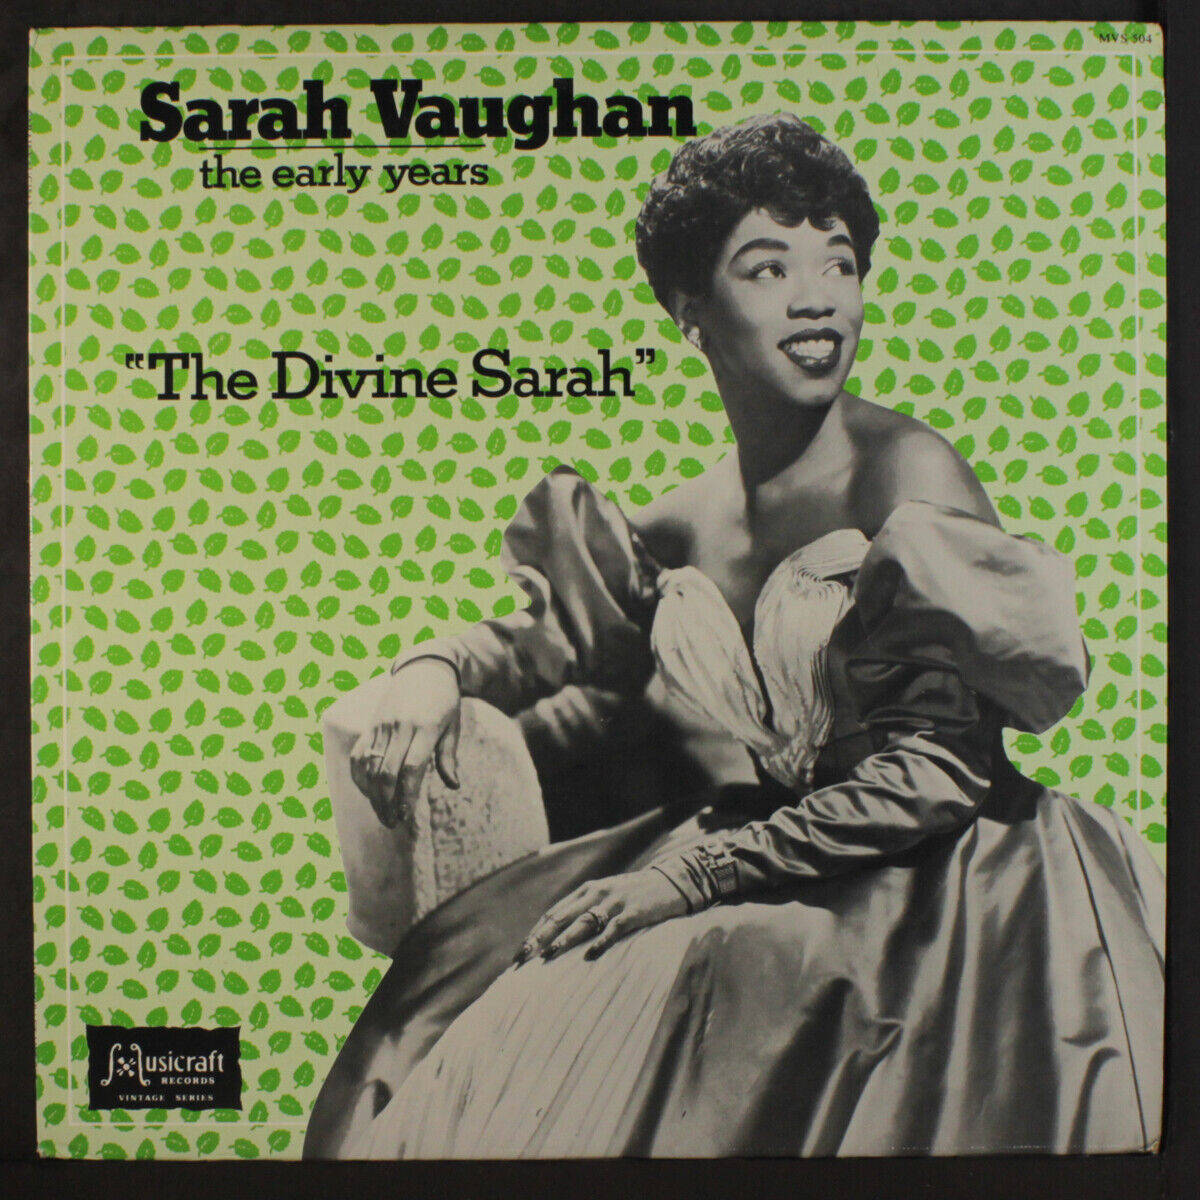 Retro Dress Pop Art Sarah Vaughan Wallpaper